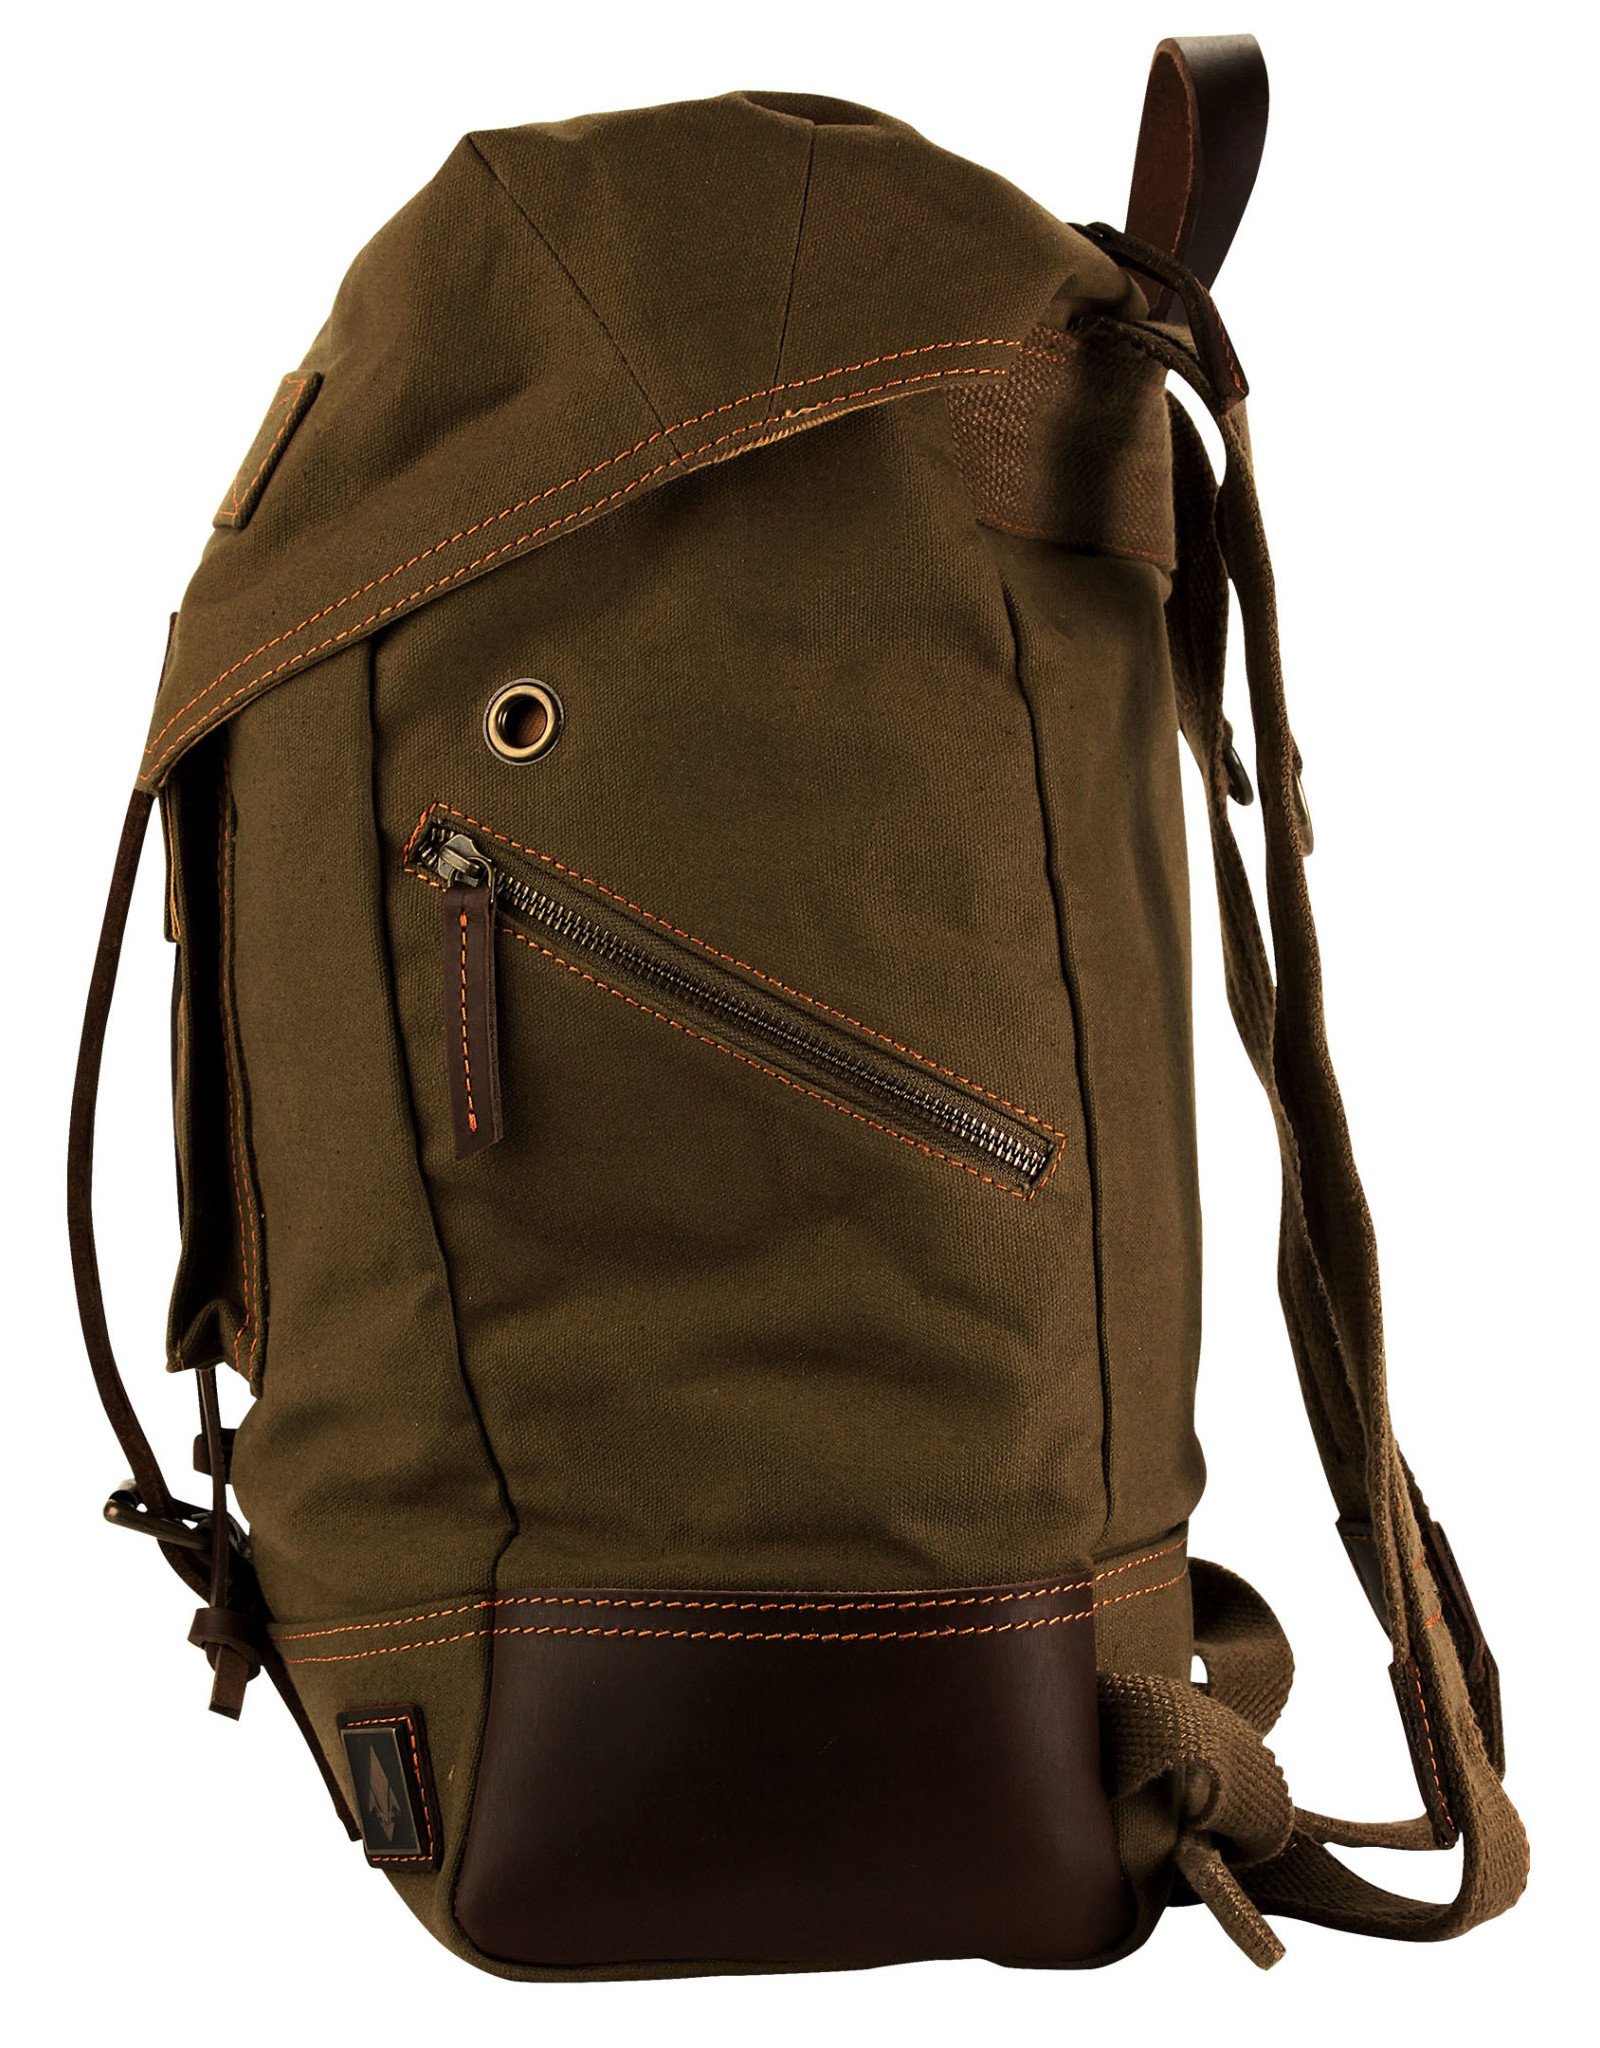 DAMNDOG Rucksack Backpack - Brown/green